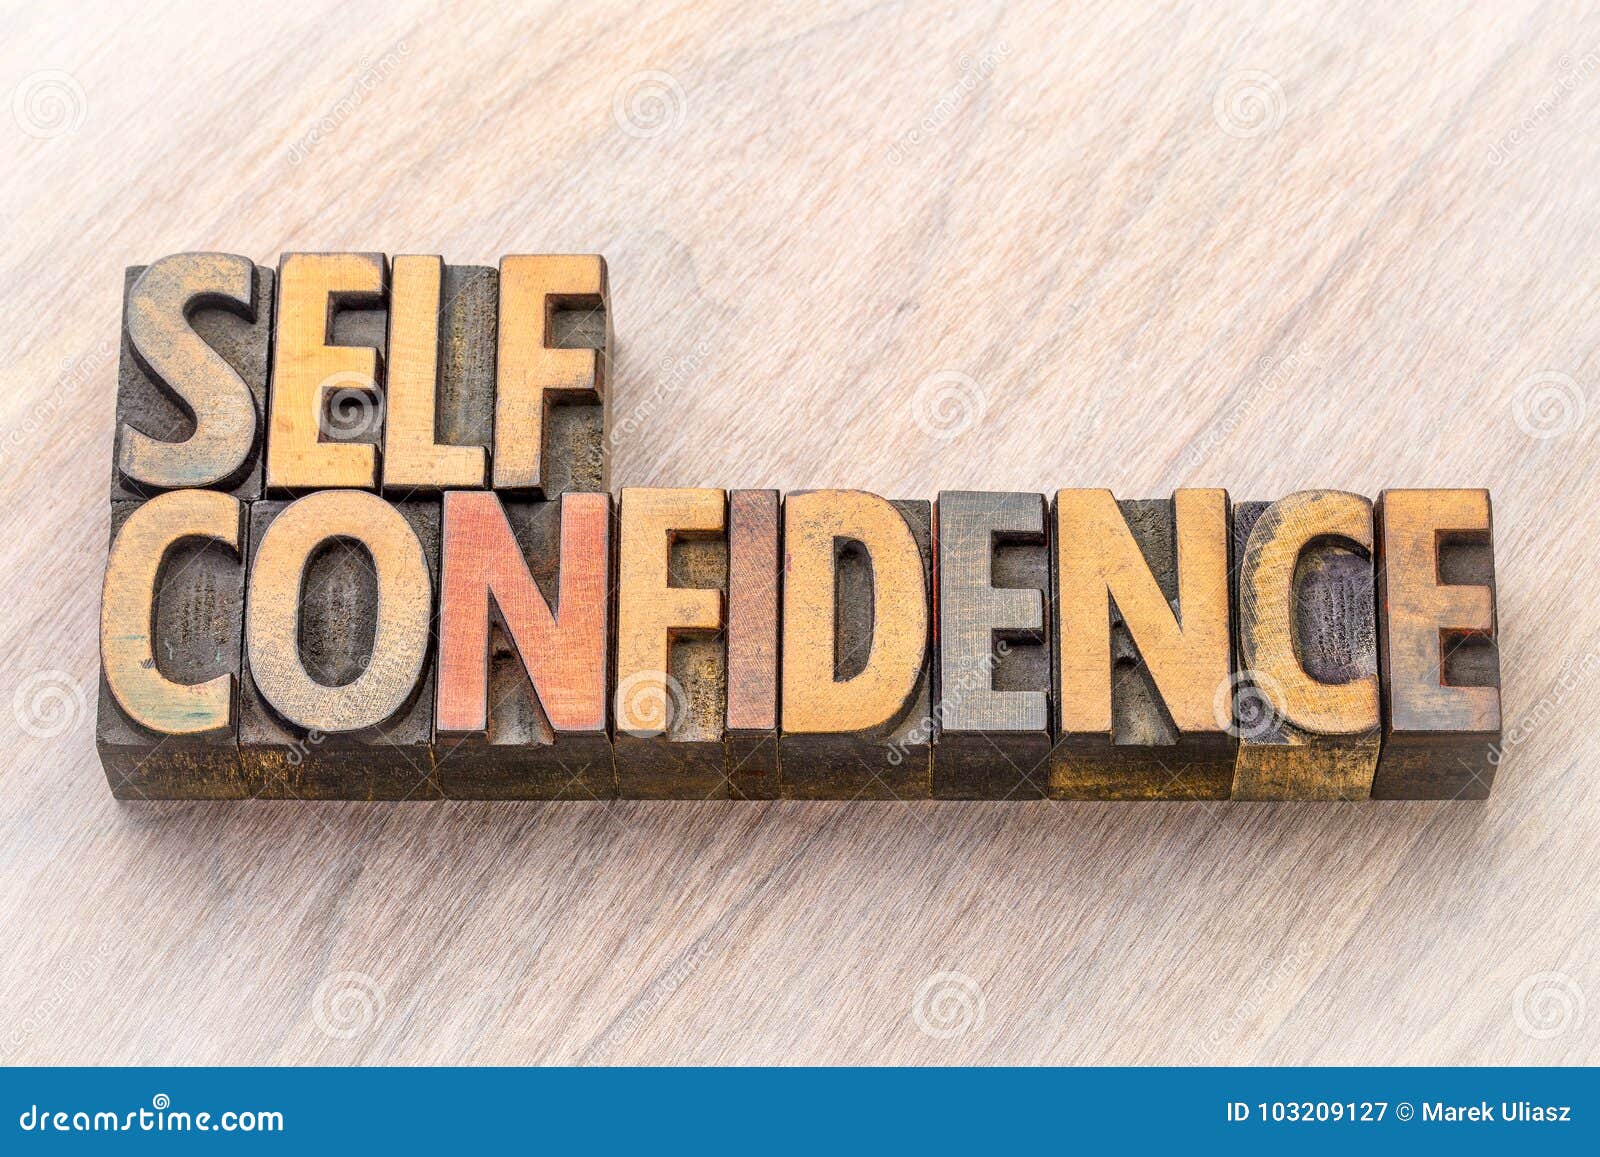 self confidence words